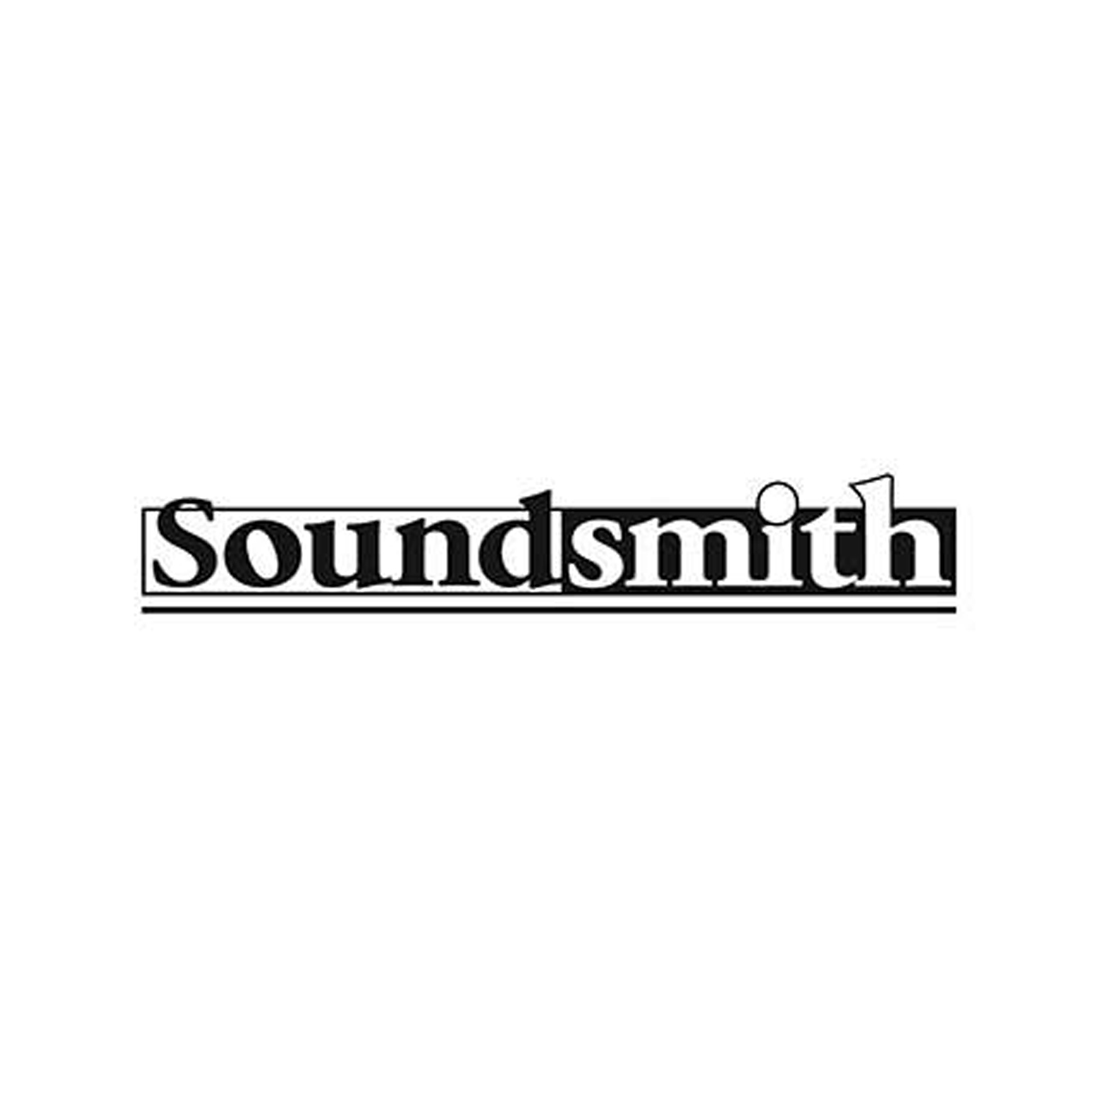 Soundsmith